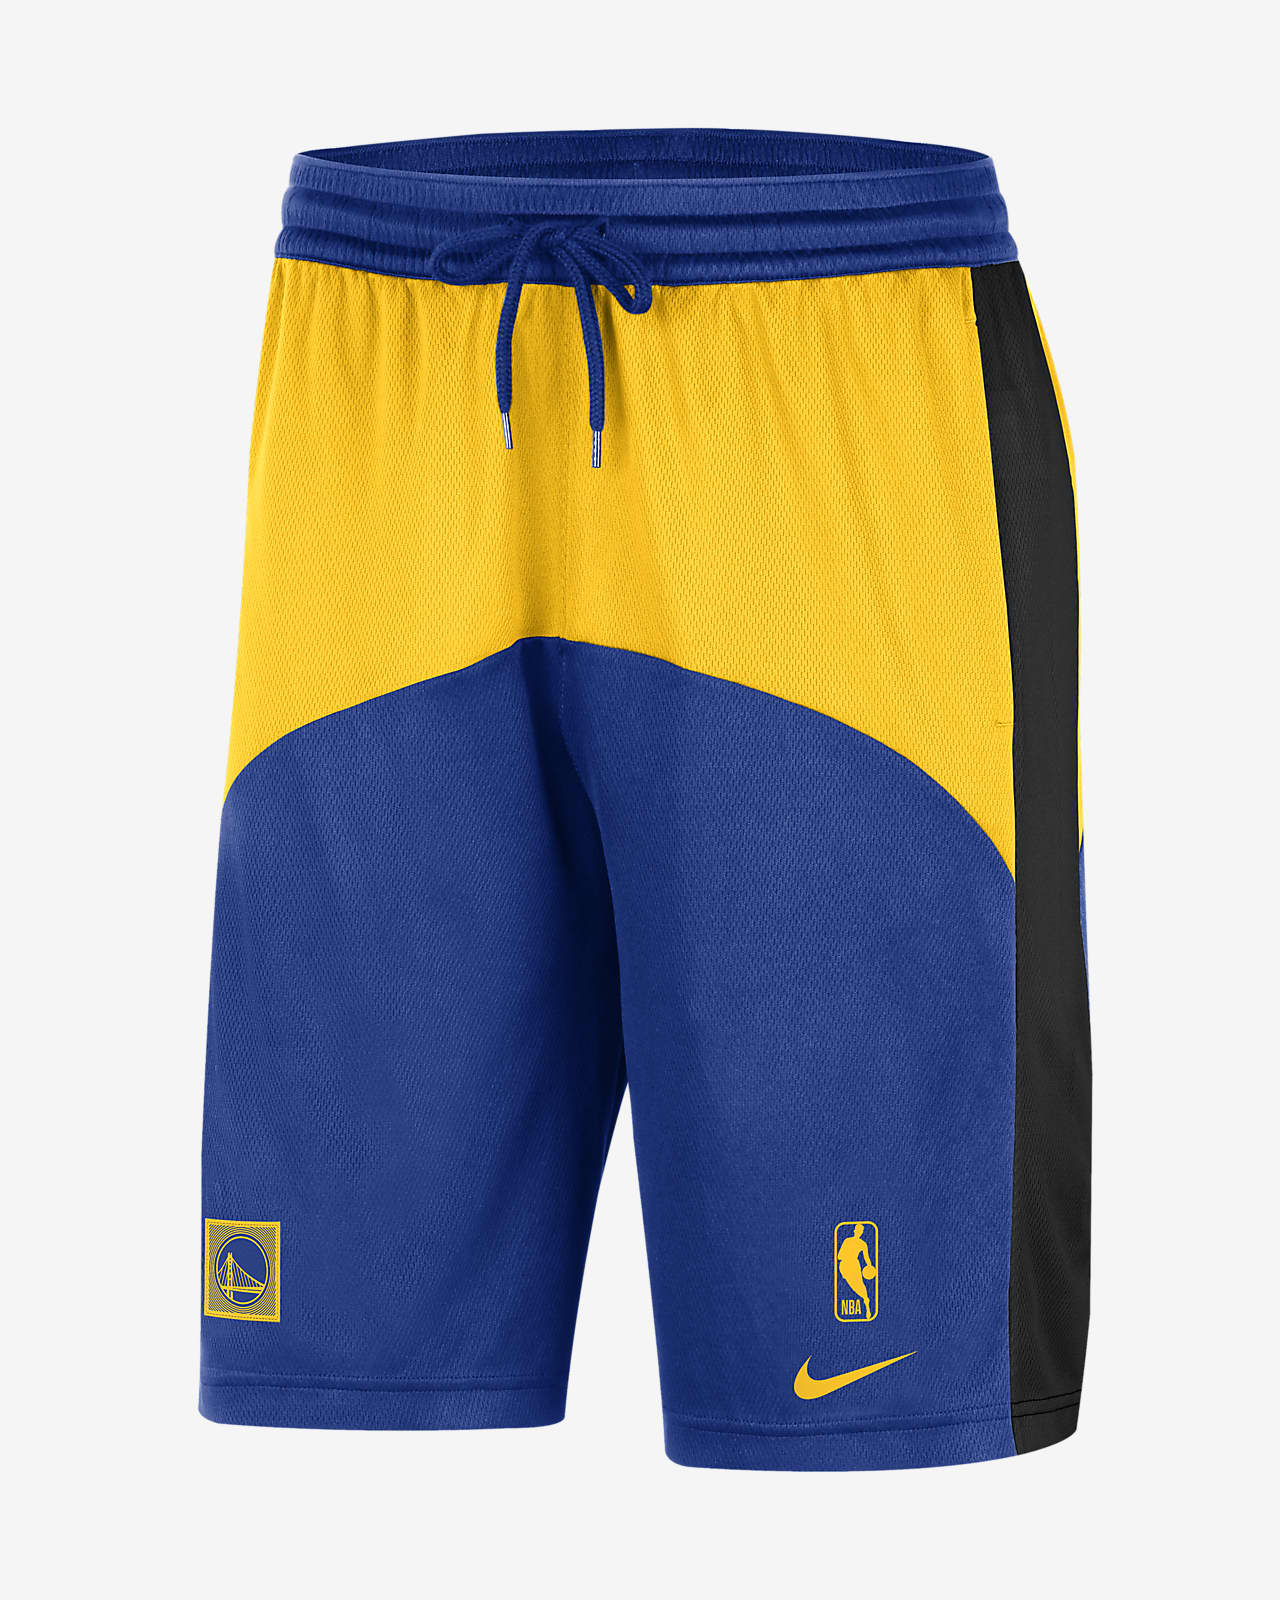 Golden State Warriors Starting 5 Men's Nike Dri-FIT NBA Shorts